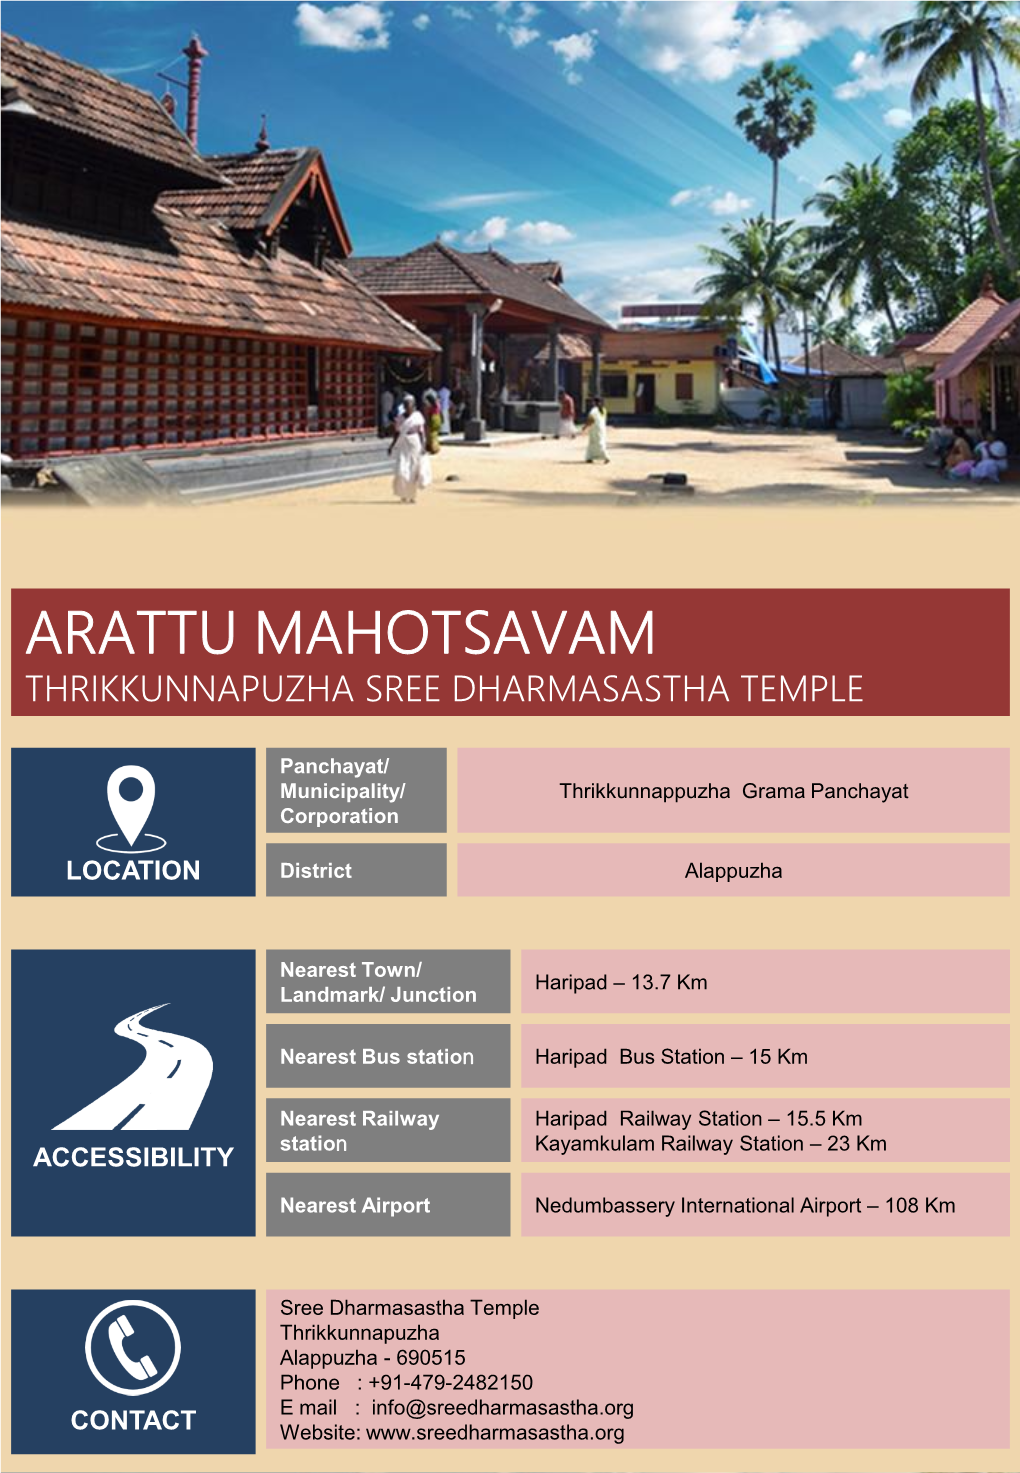 Arattu Mahotsavam Thrikkunnapuzha Sree Dharmasastha Temple